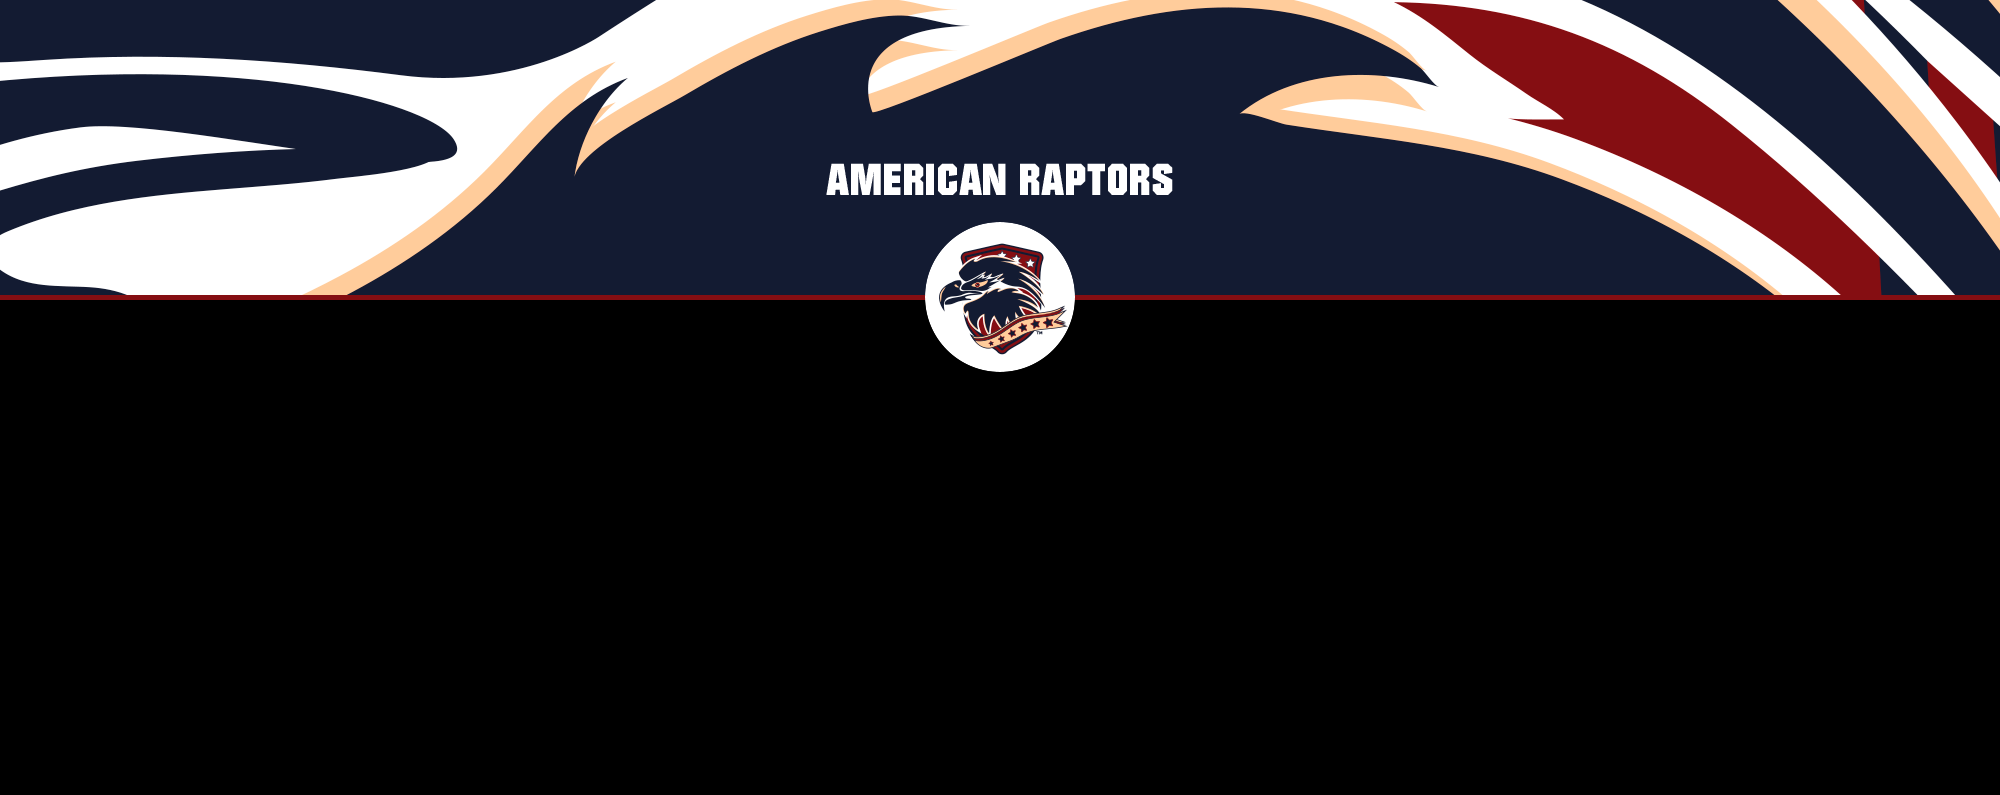 American Raptors banner